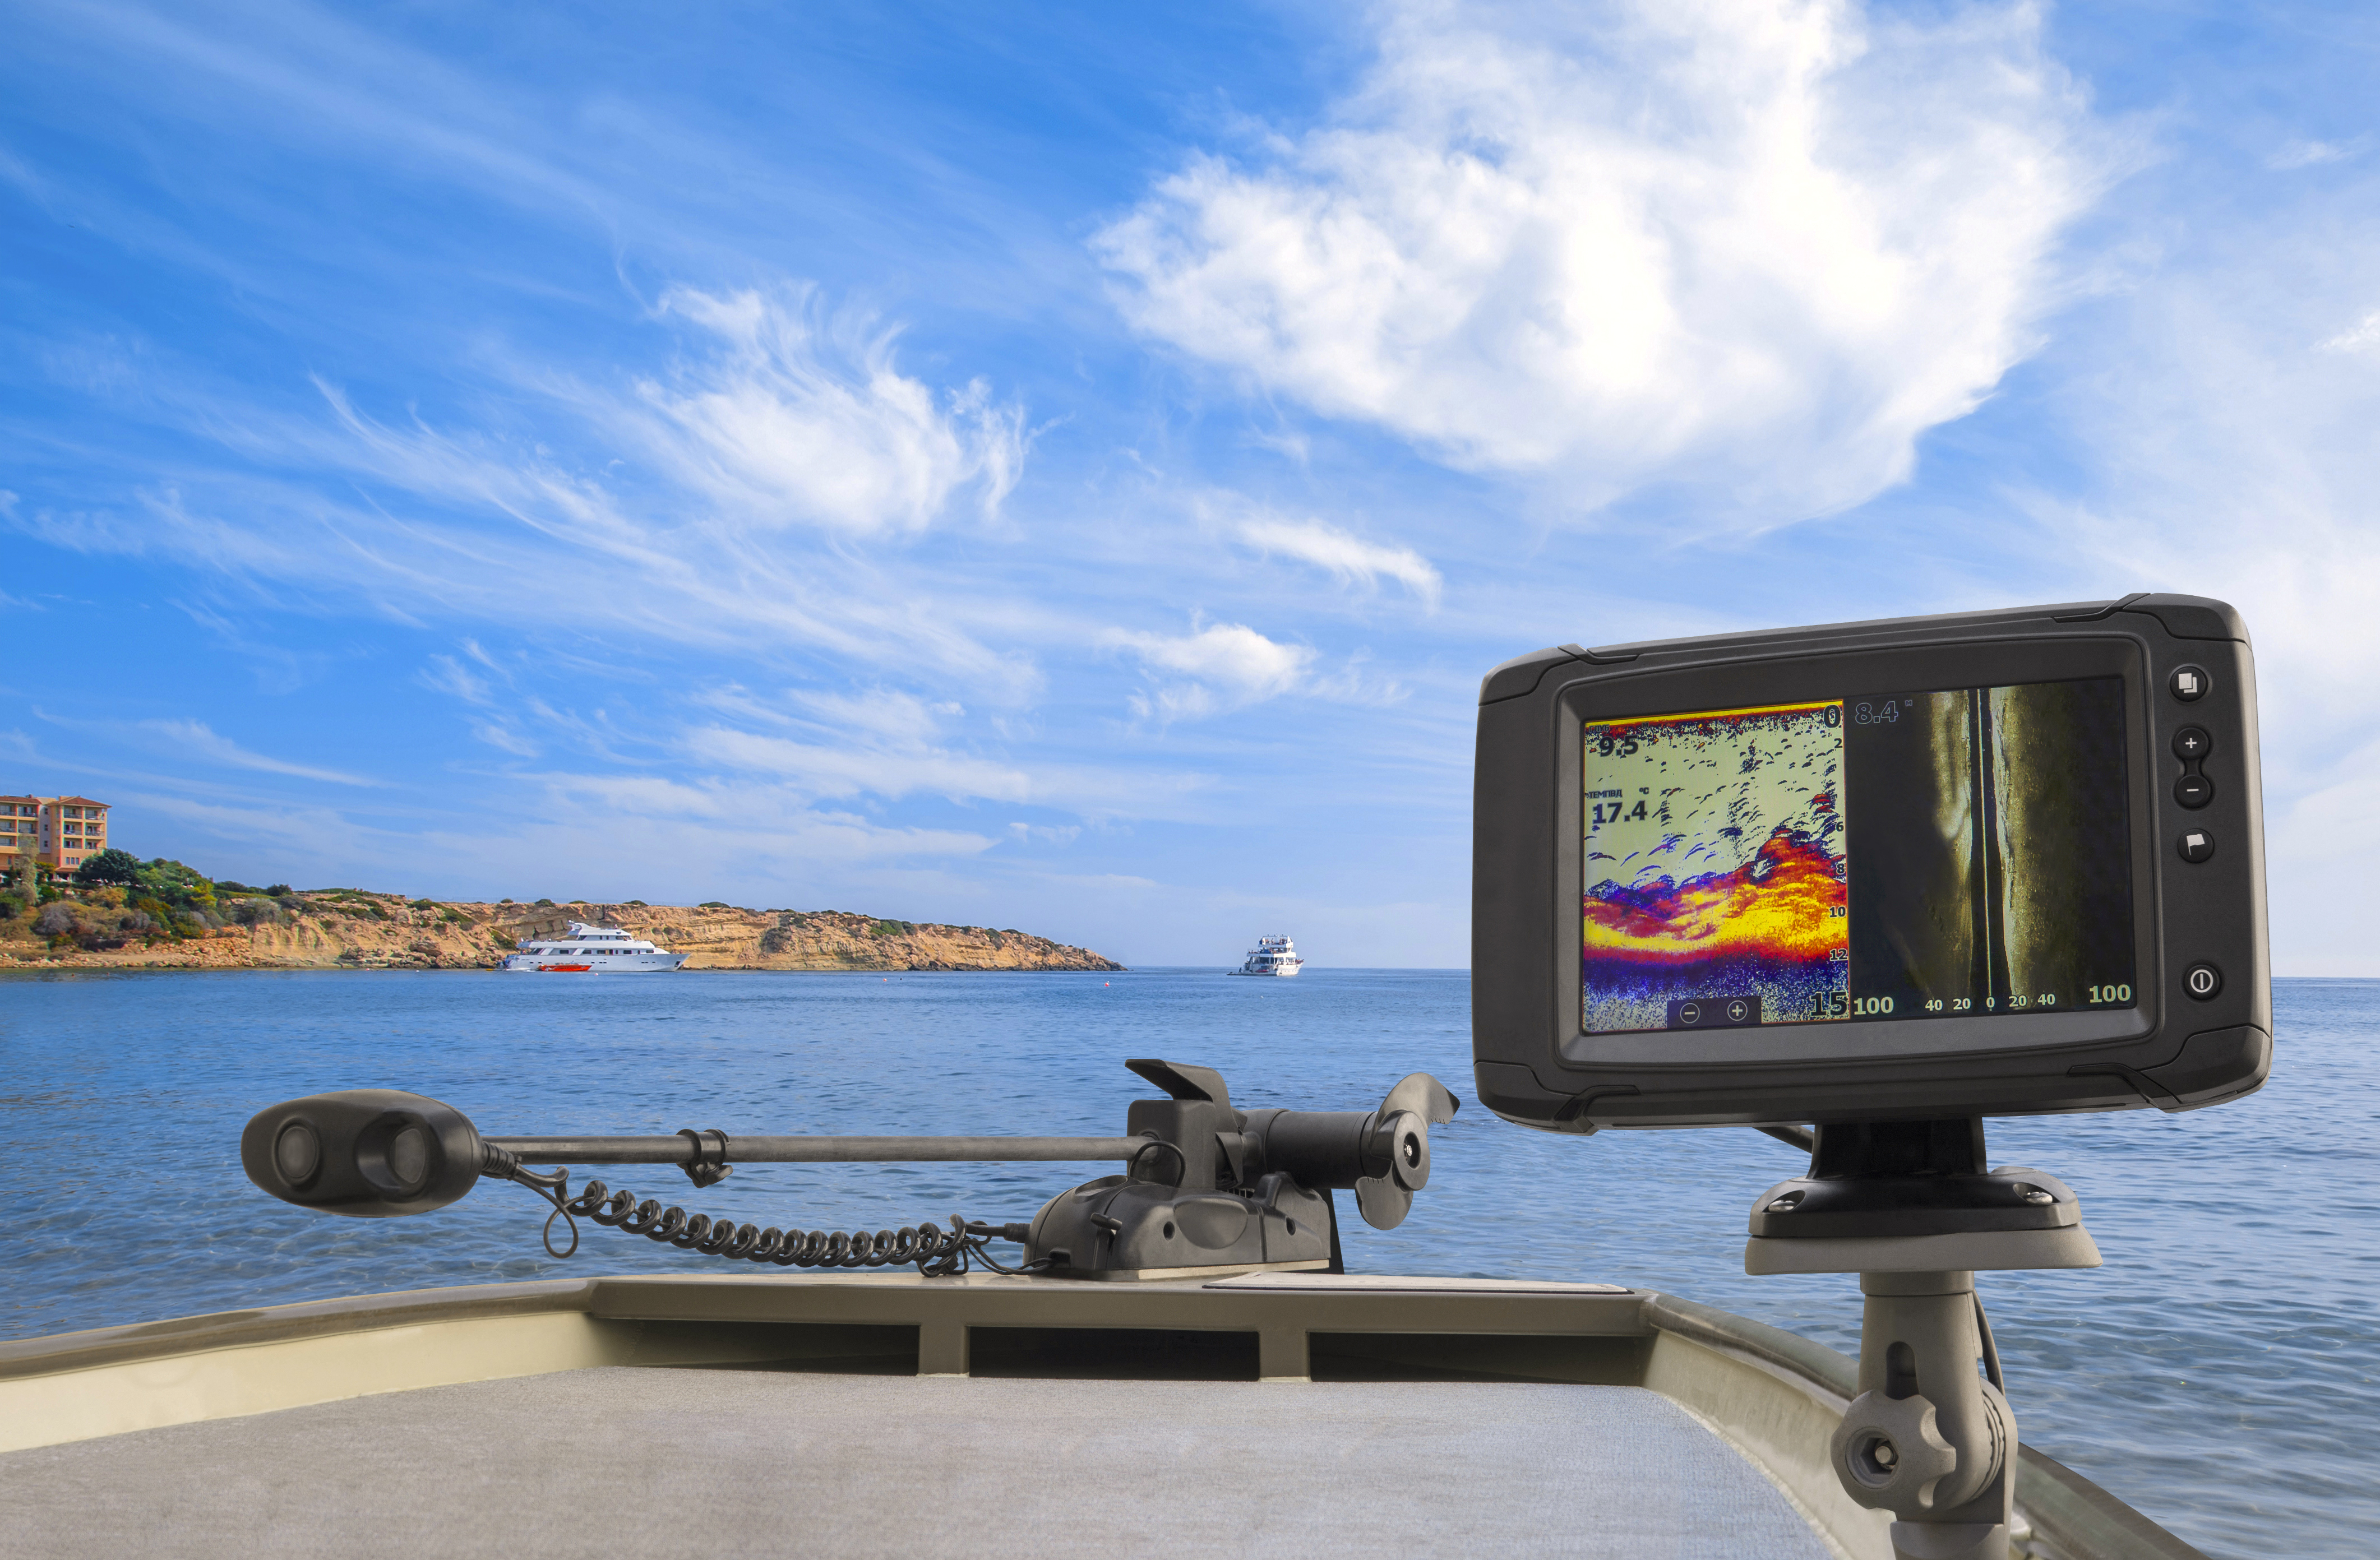 Fishfinder, echolot, fishing sonar at the boat